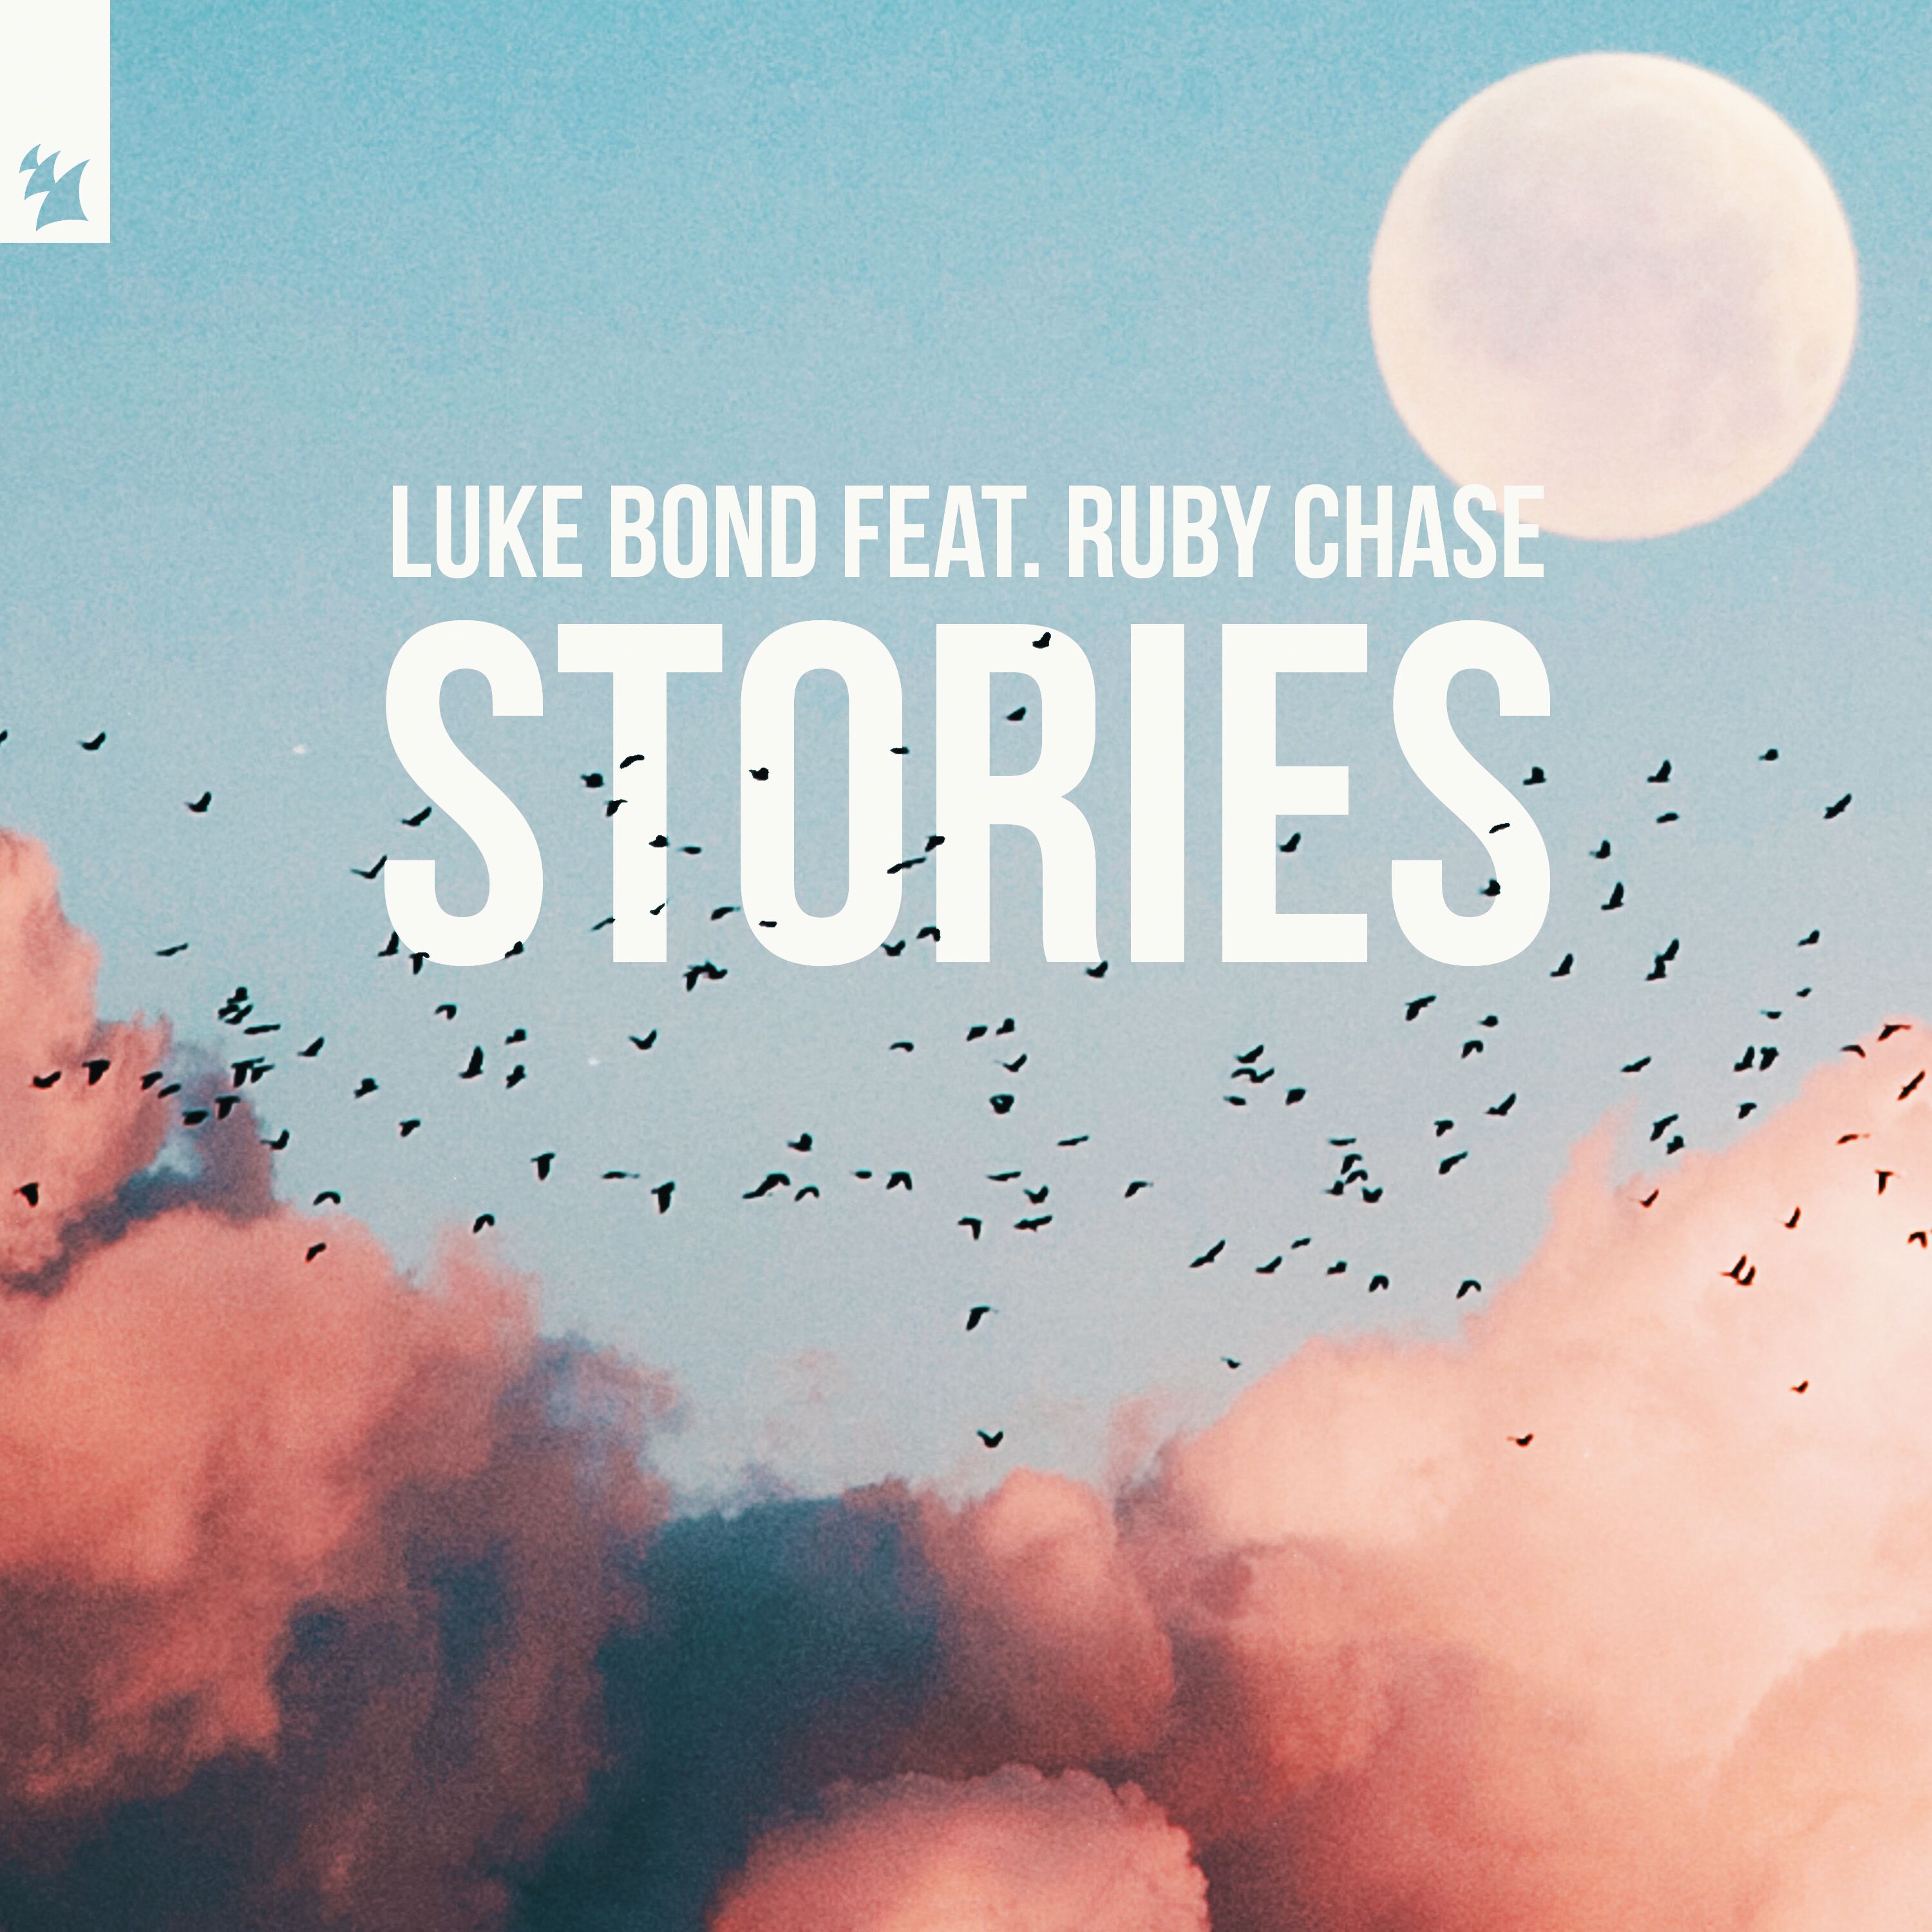 Luke Bond feat. Ruby Chase presents Stories on Armada Music